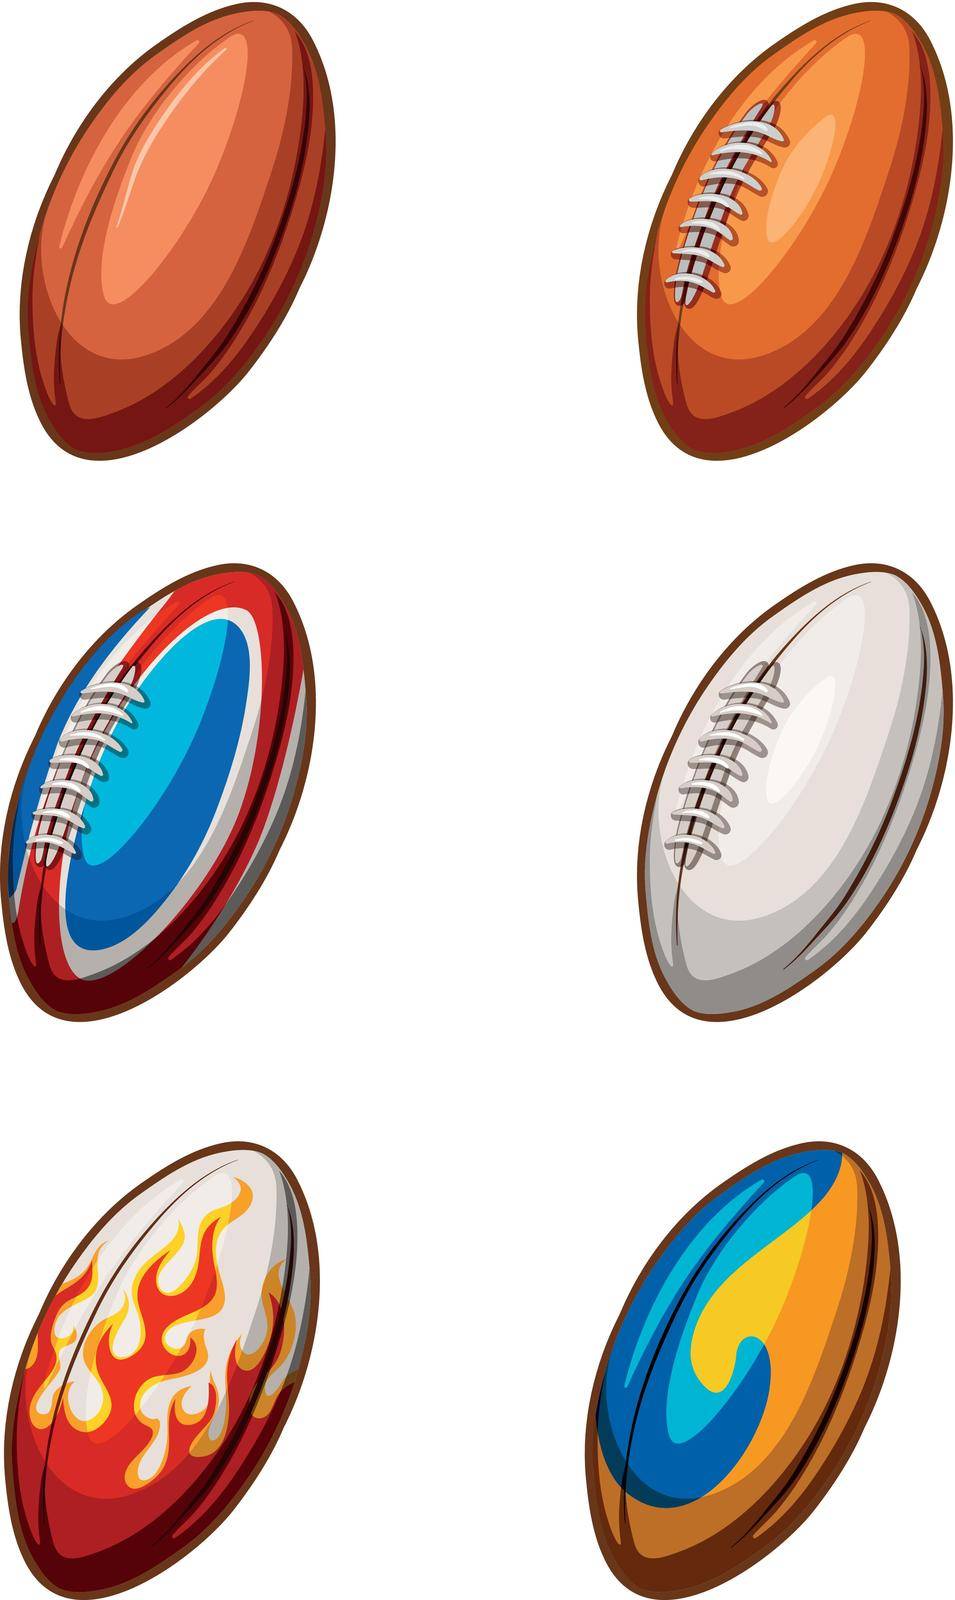 Illustration of different design of football